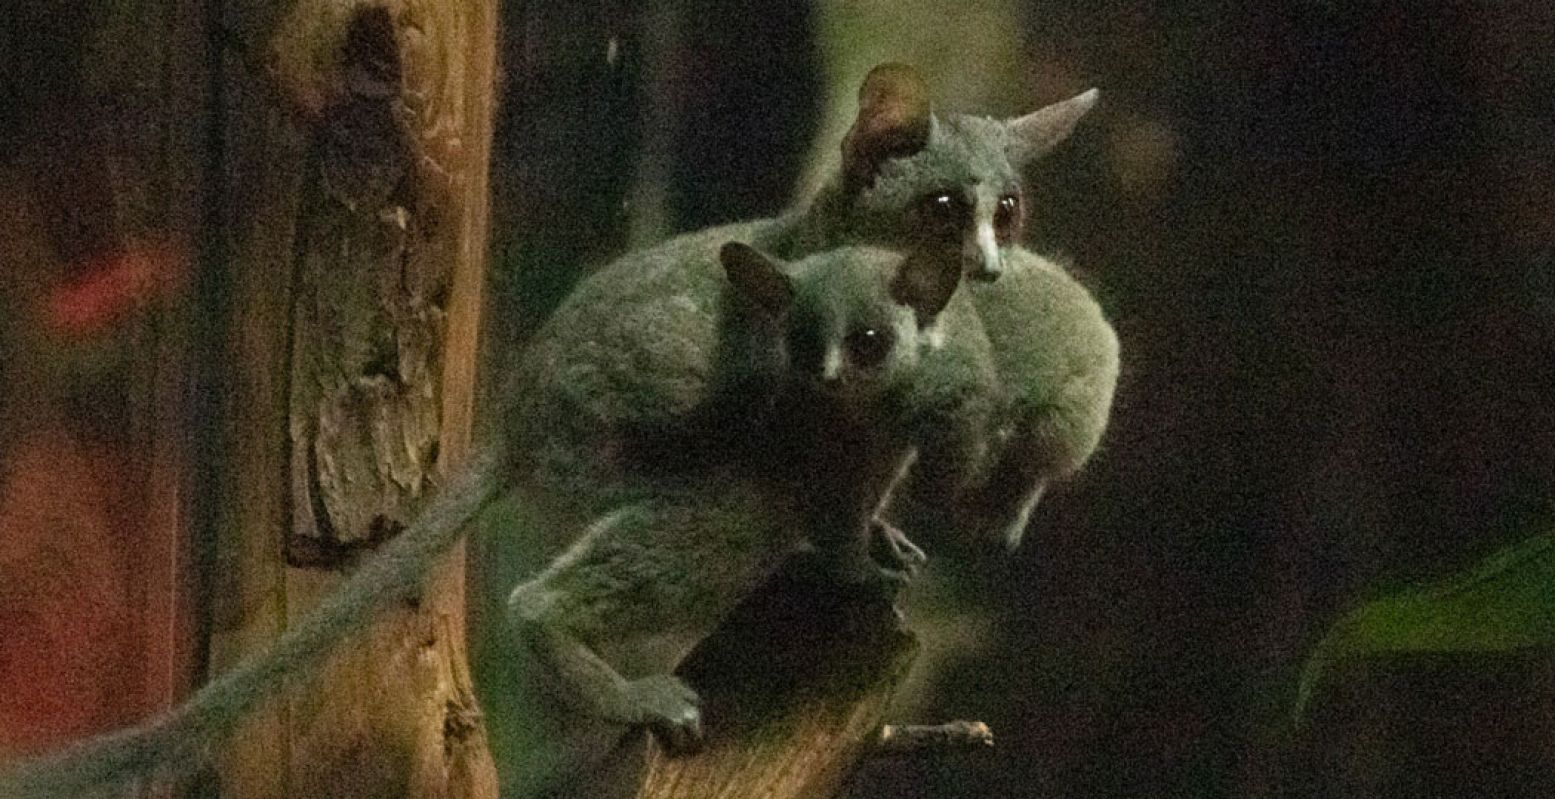 Aapjes kijken? In Dierenpark Amersfoort werden twee jonge galago-aapjes geboren! Foto: Dierenpark Amersfoort